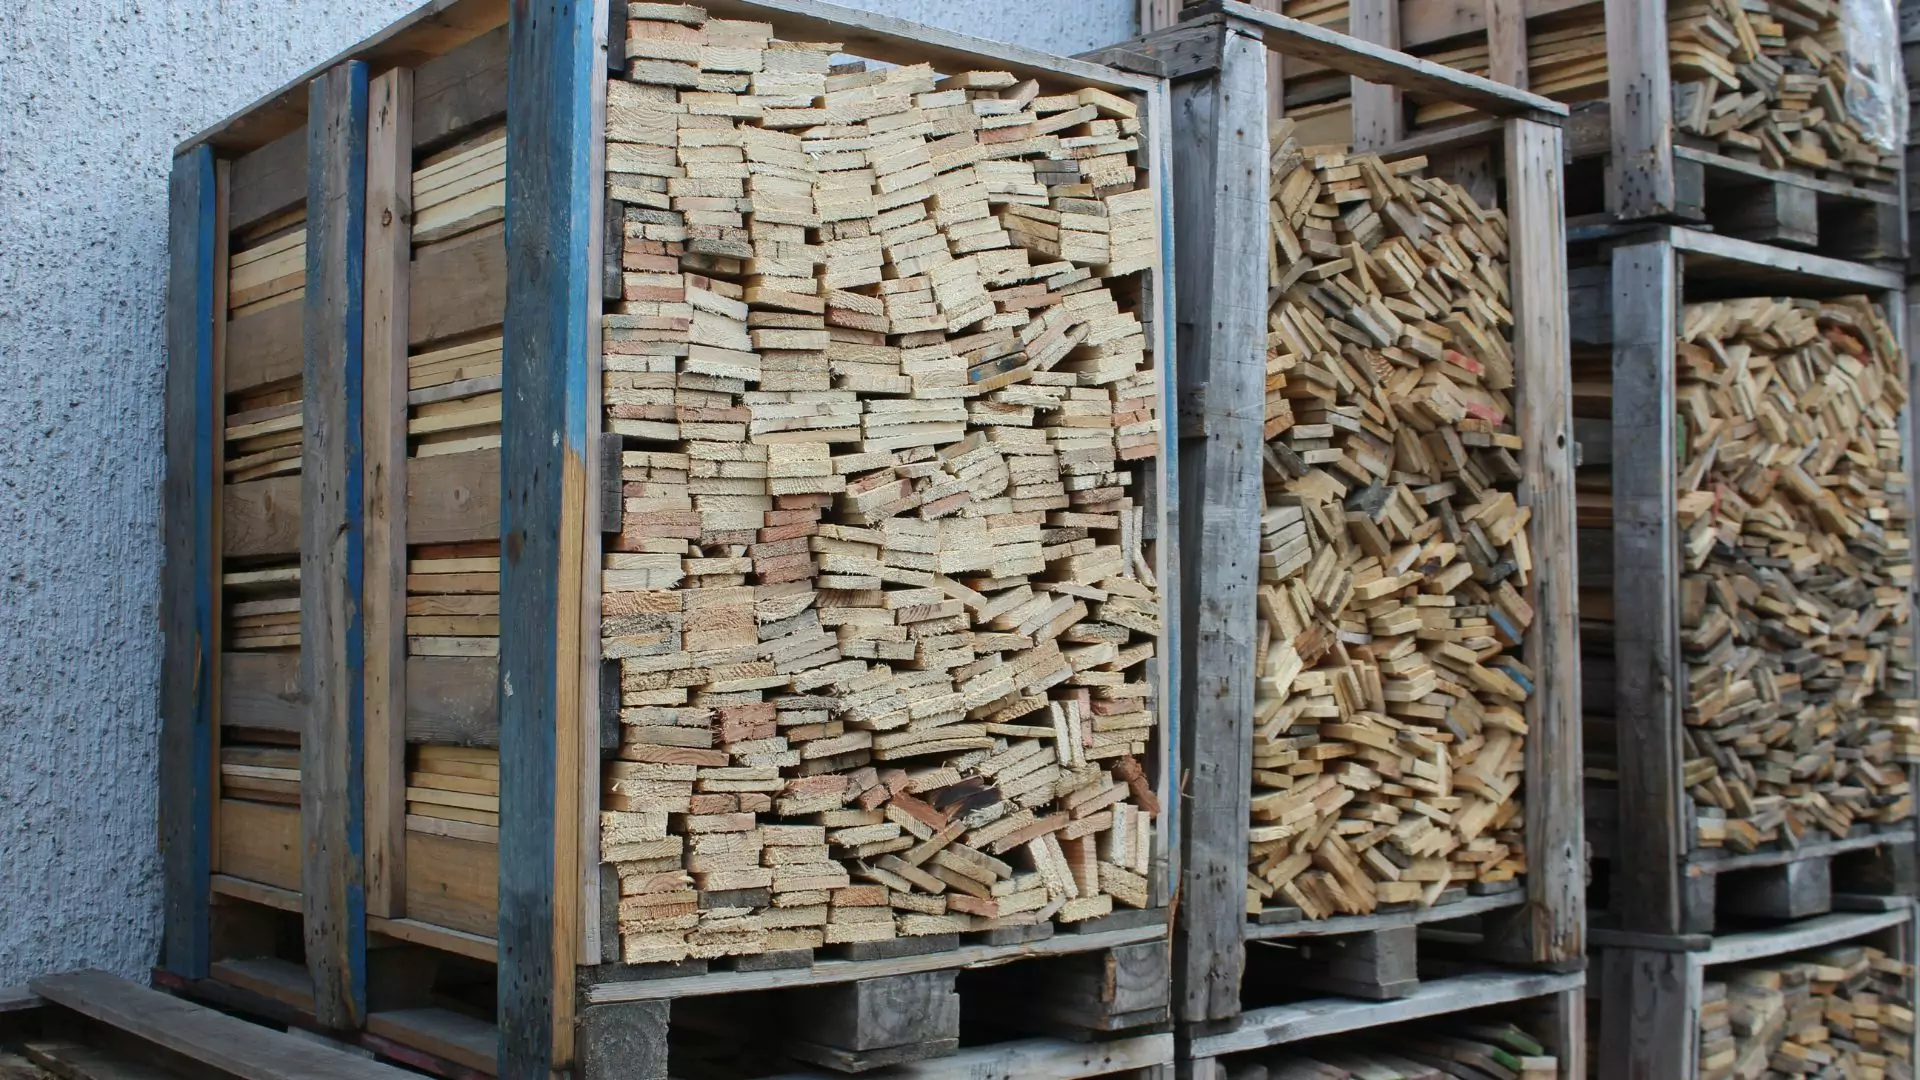 Qué tipo de madera se utiliza para fabricar palets? - Reciclajes Moa -  Palets Barcelona